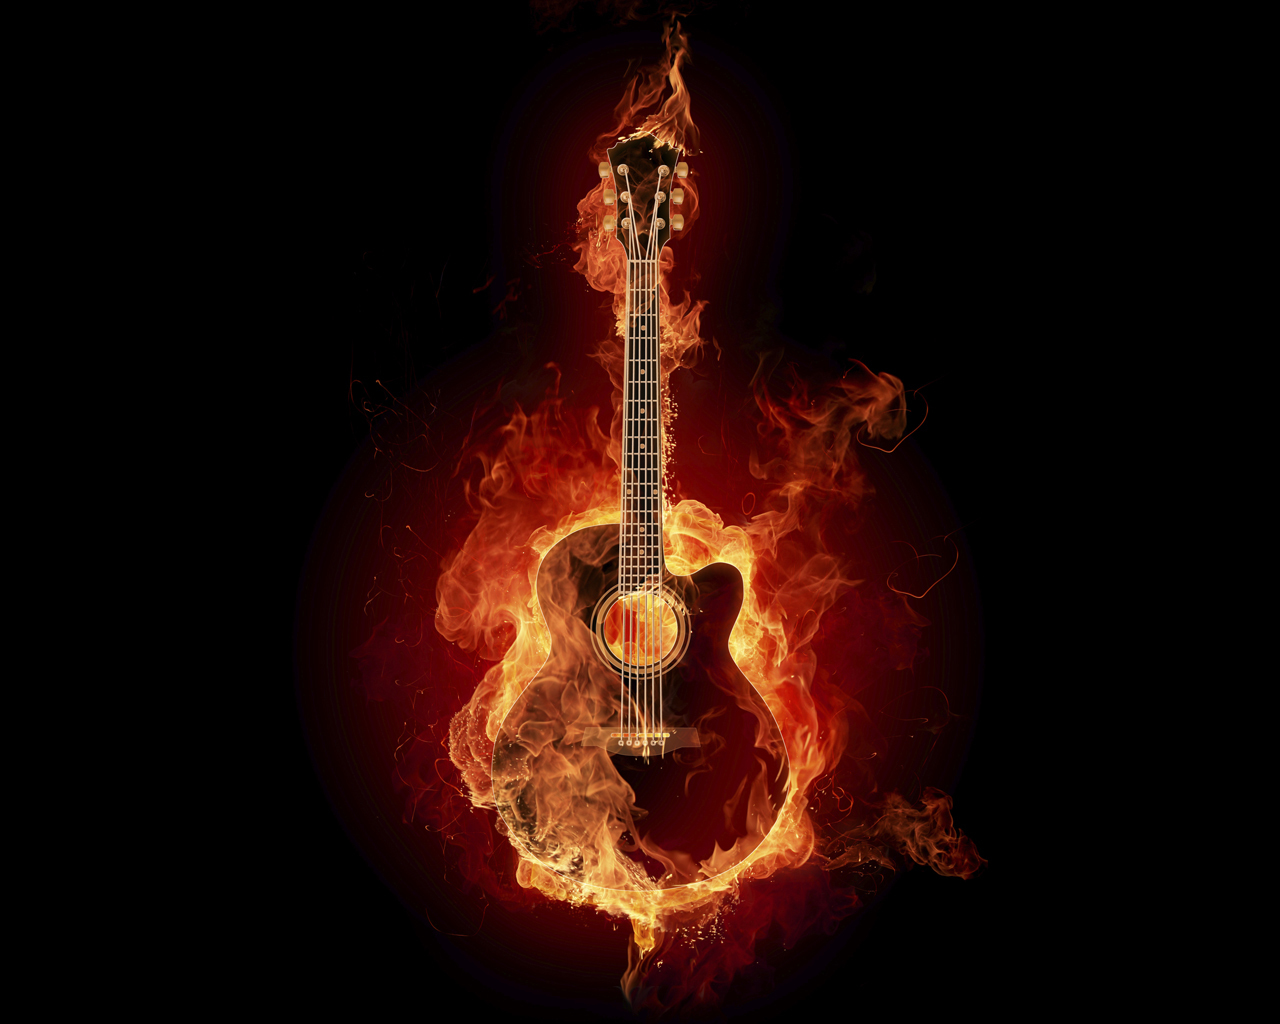 8k Guitars Images